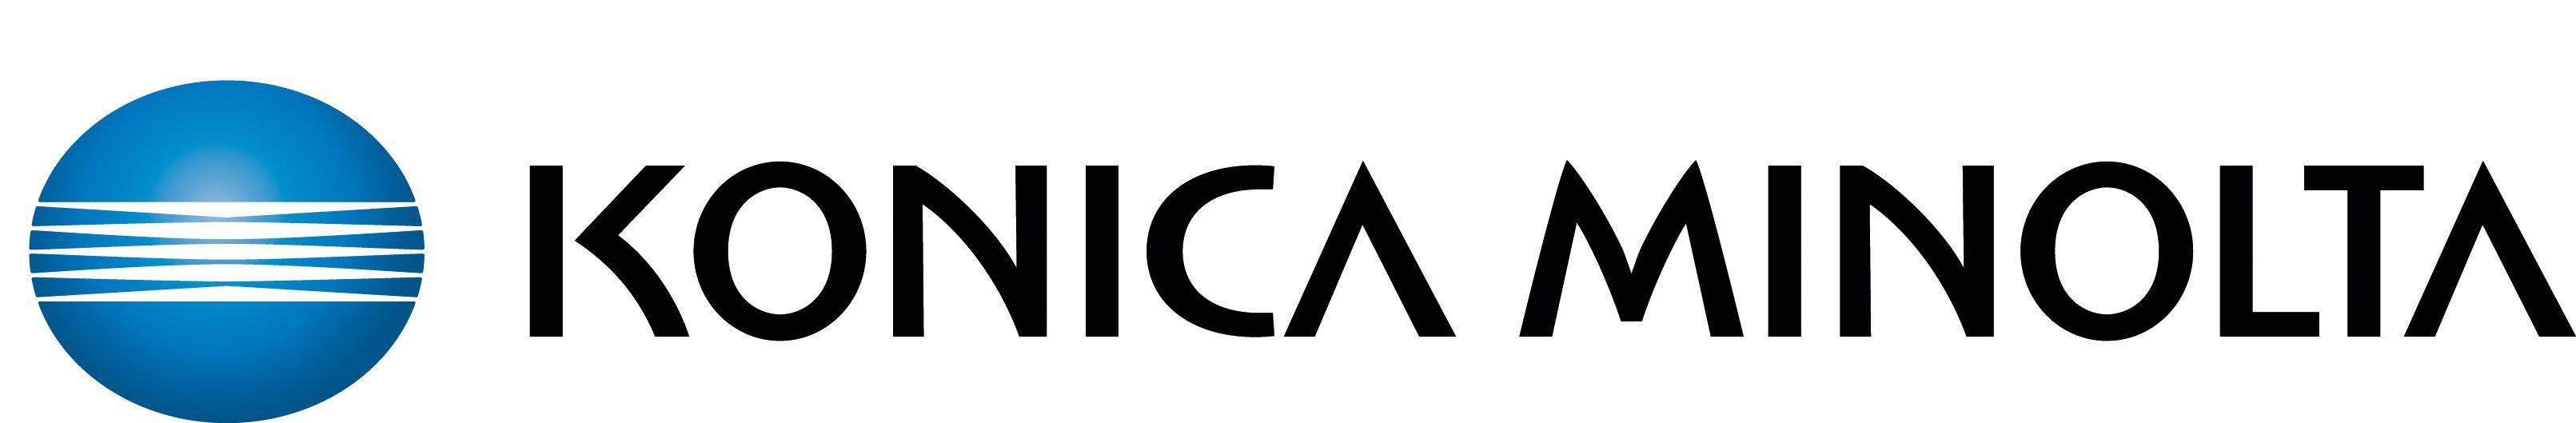 Konica Minolta Logo - Konica Minolta Strengthens its Presence in Alabama with Acquisition